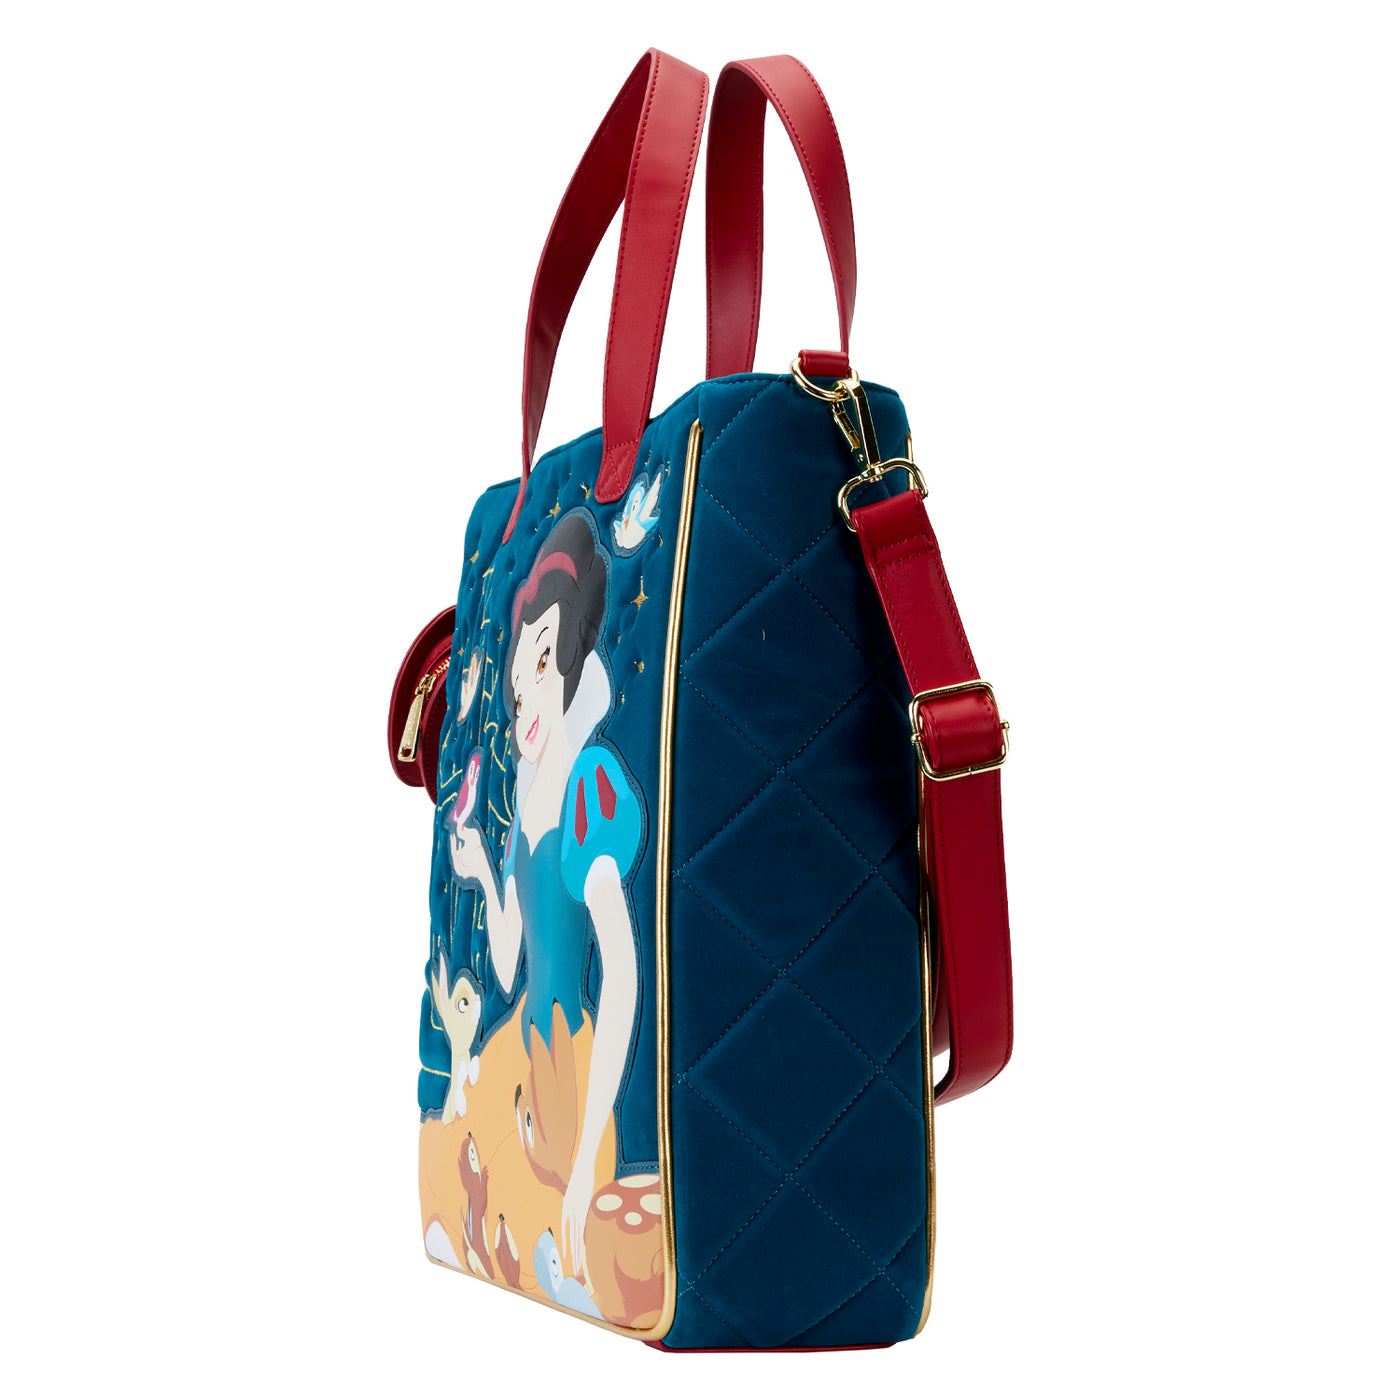 Disney Snow White Heritage Quilted Velvet Tote Bag